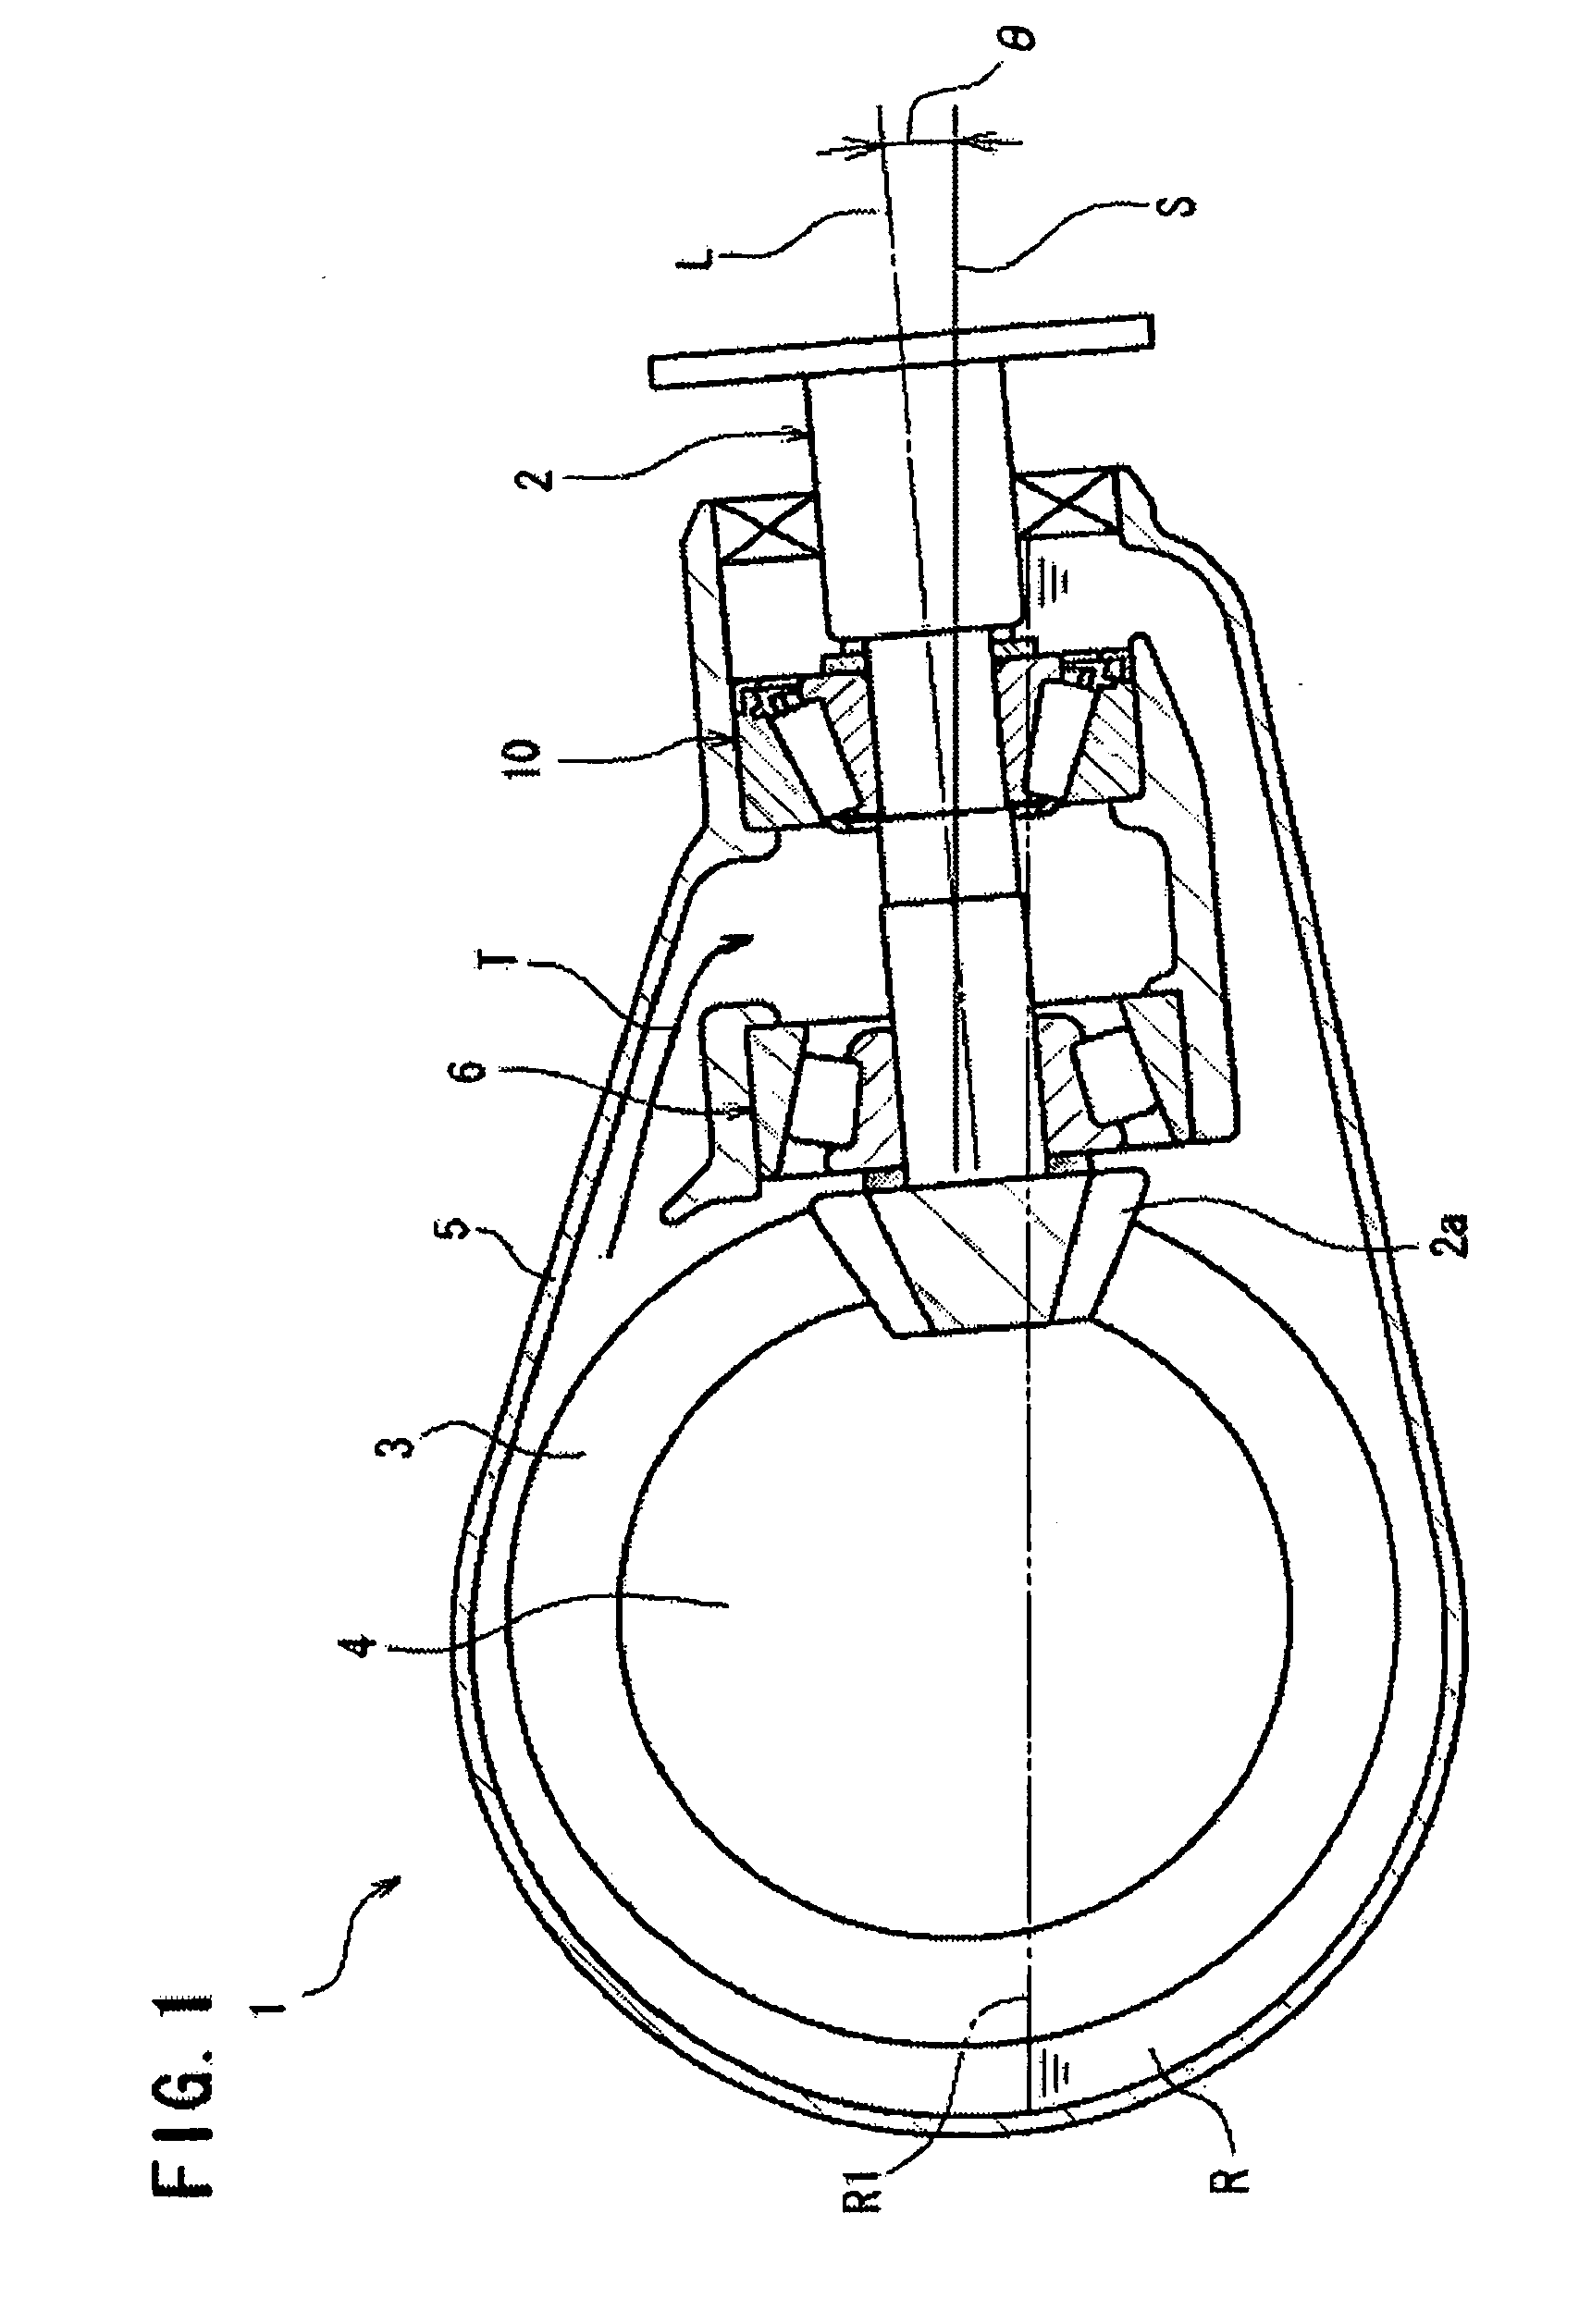 Tapered roller bearing apparatus